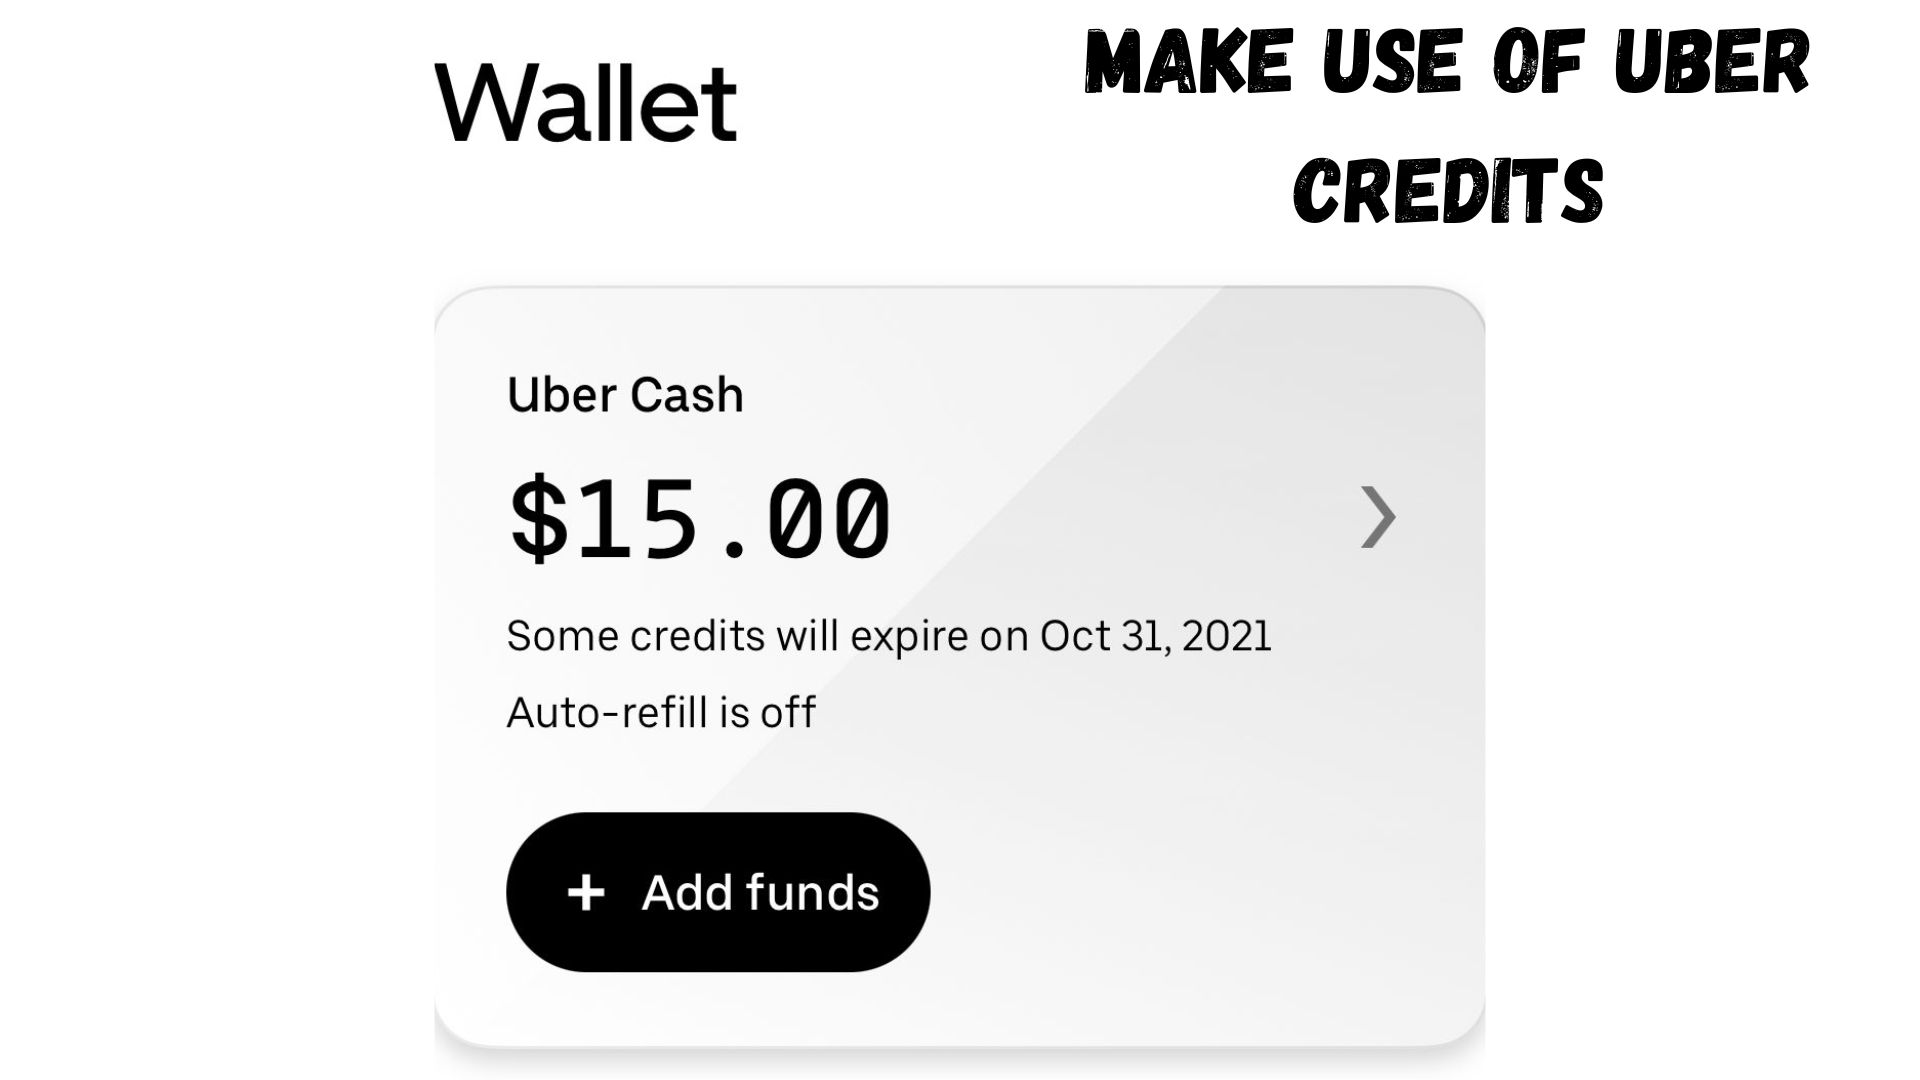 Make Use of Uber Credits.